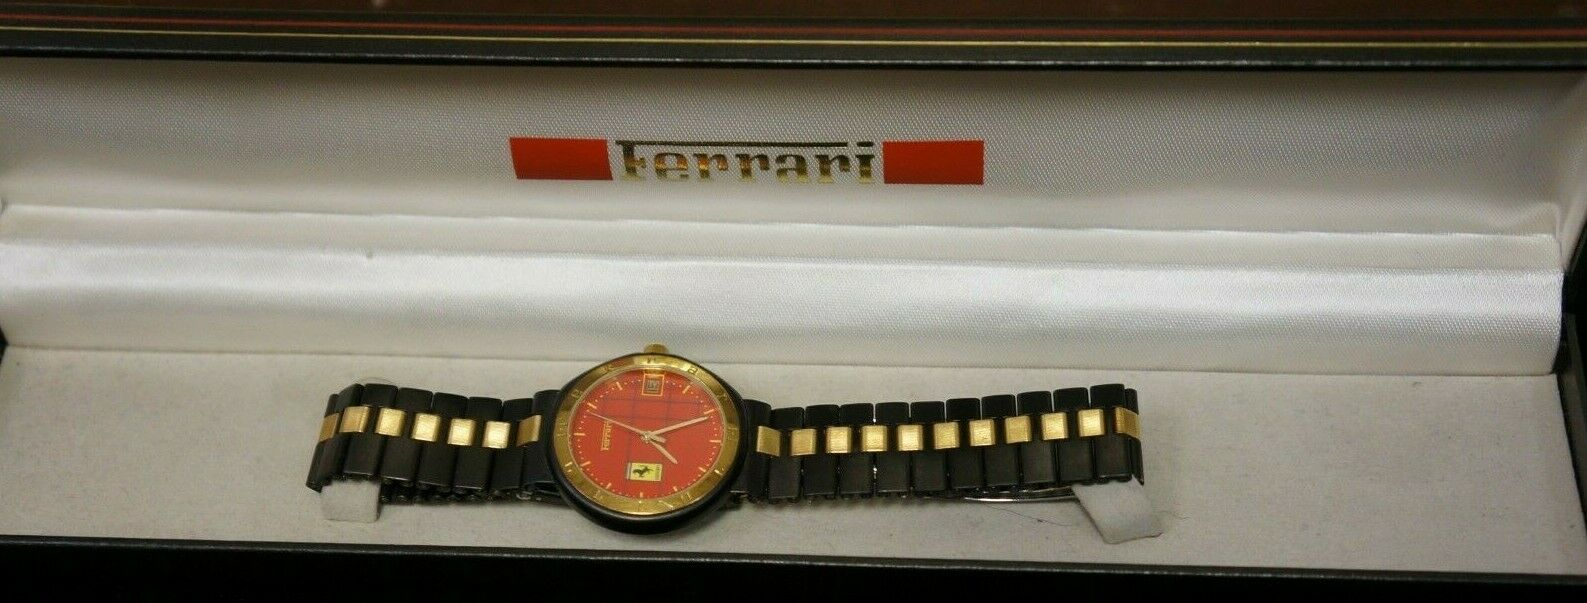 vintage ferrari cartier watch